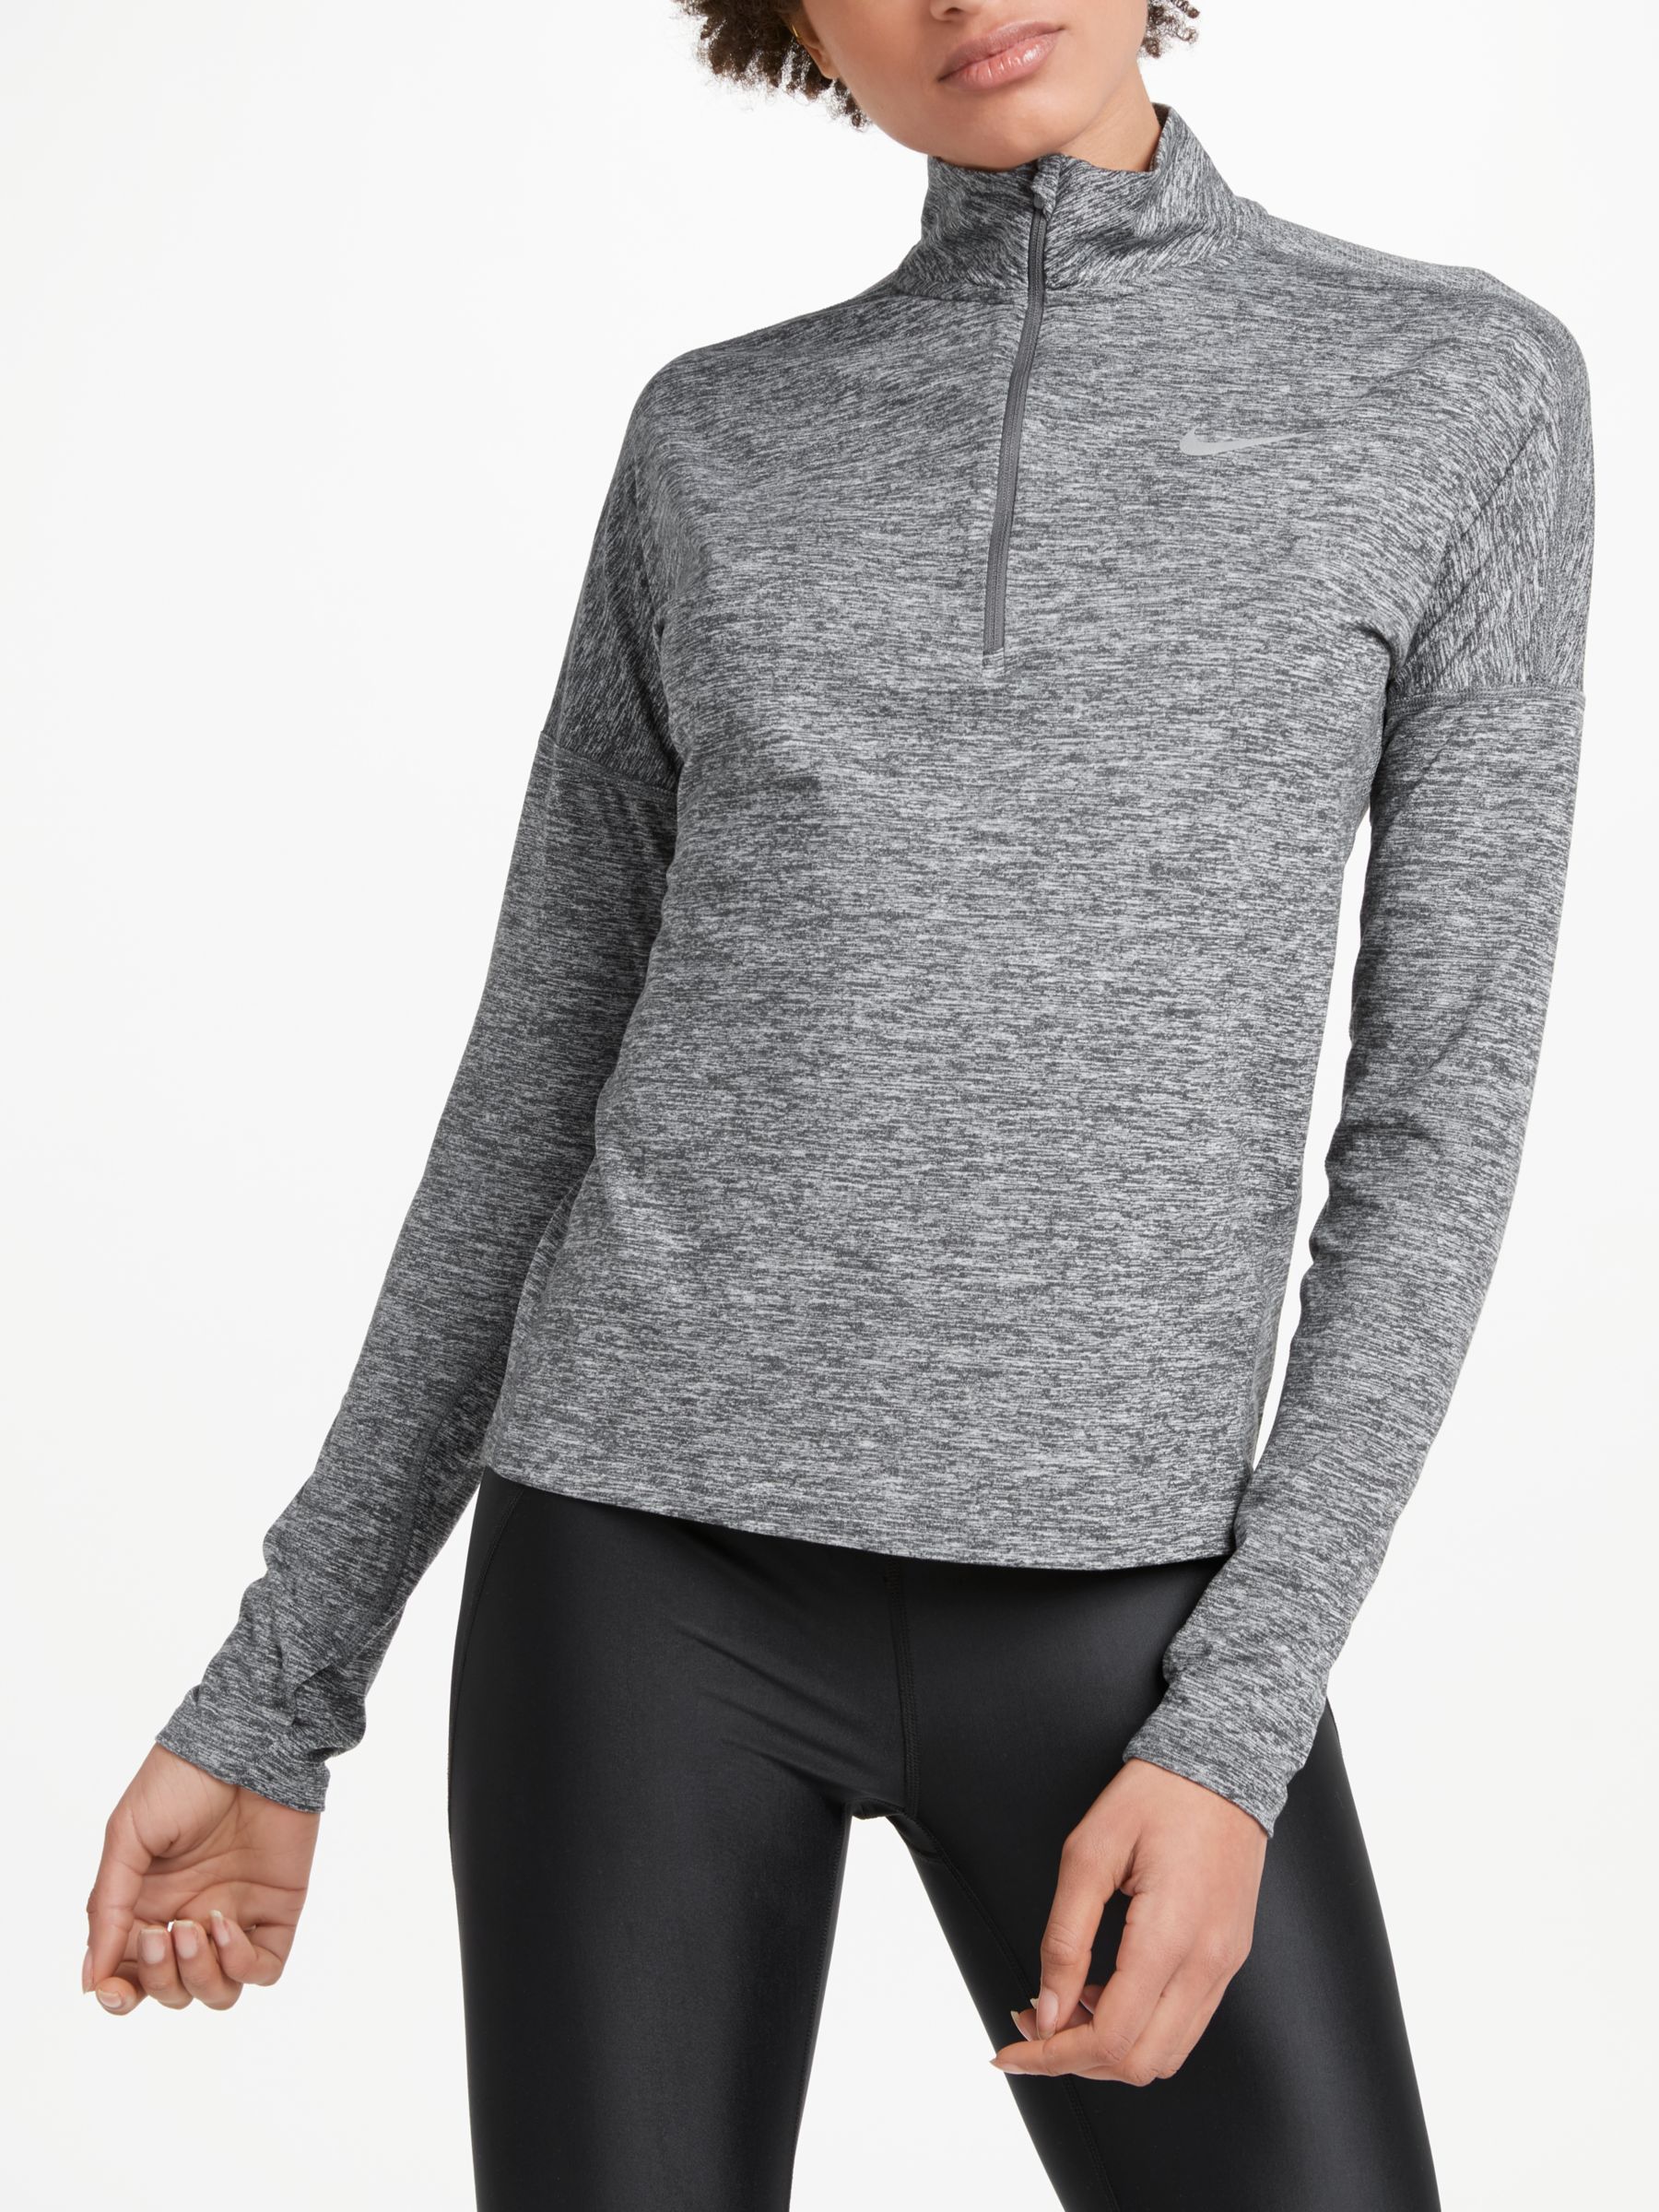 Nike Dry Element Long Sleeve Running T-Shirt, Dark Grey Heather, XS